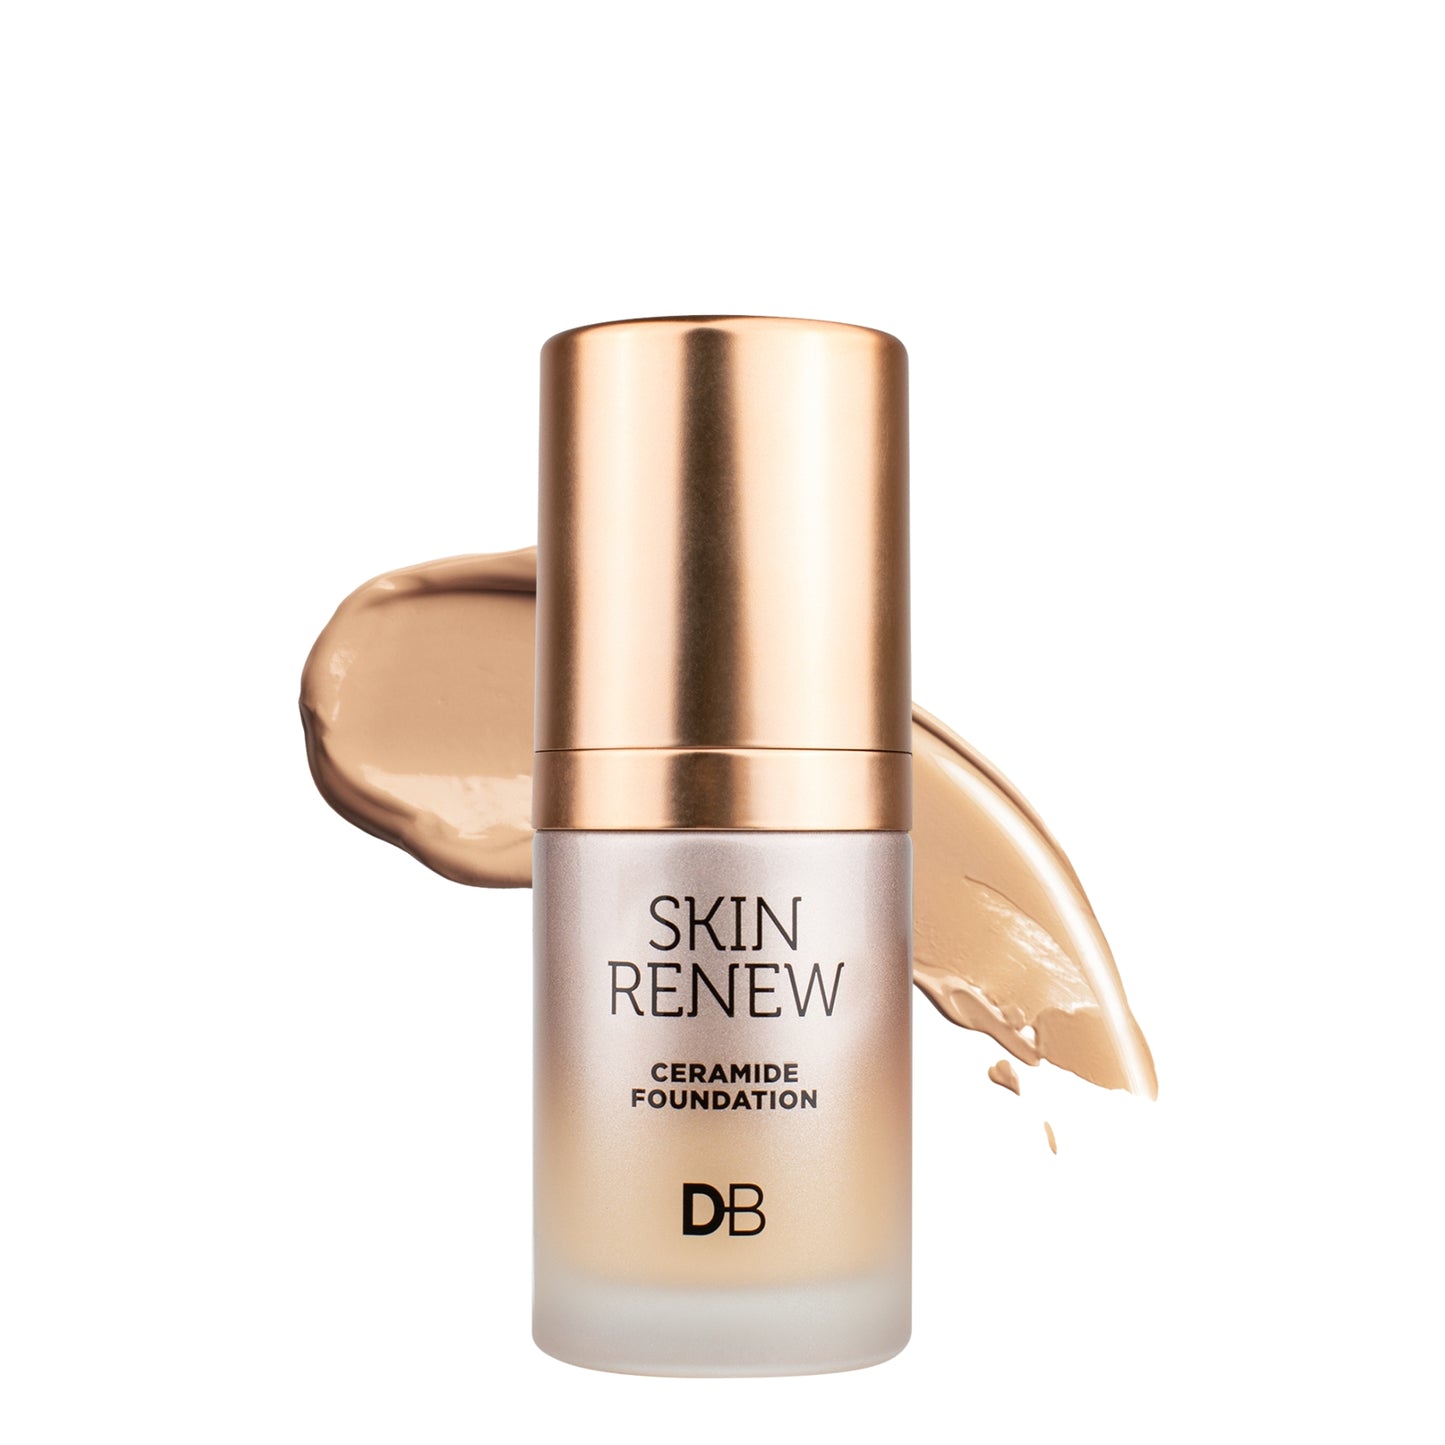 Skin Renew Ceramide Foundation (True Beige) | DB Cosmetics